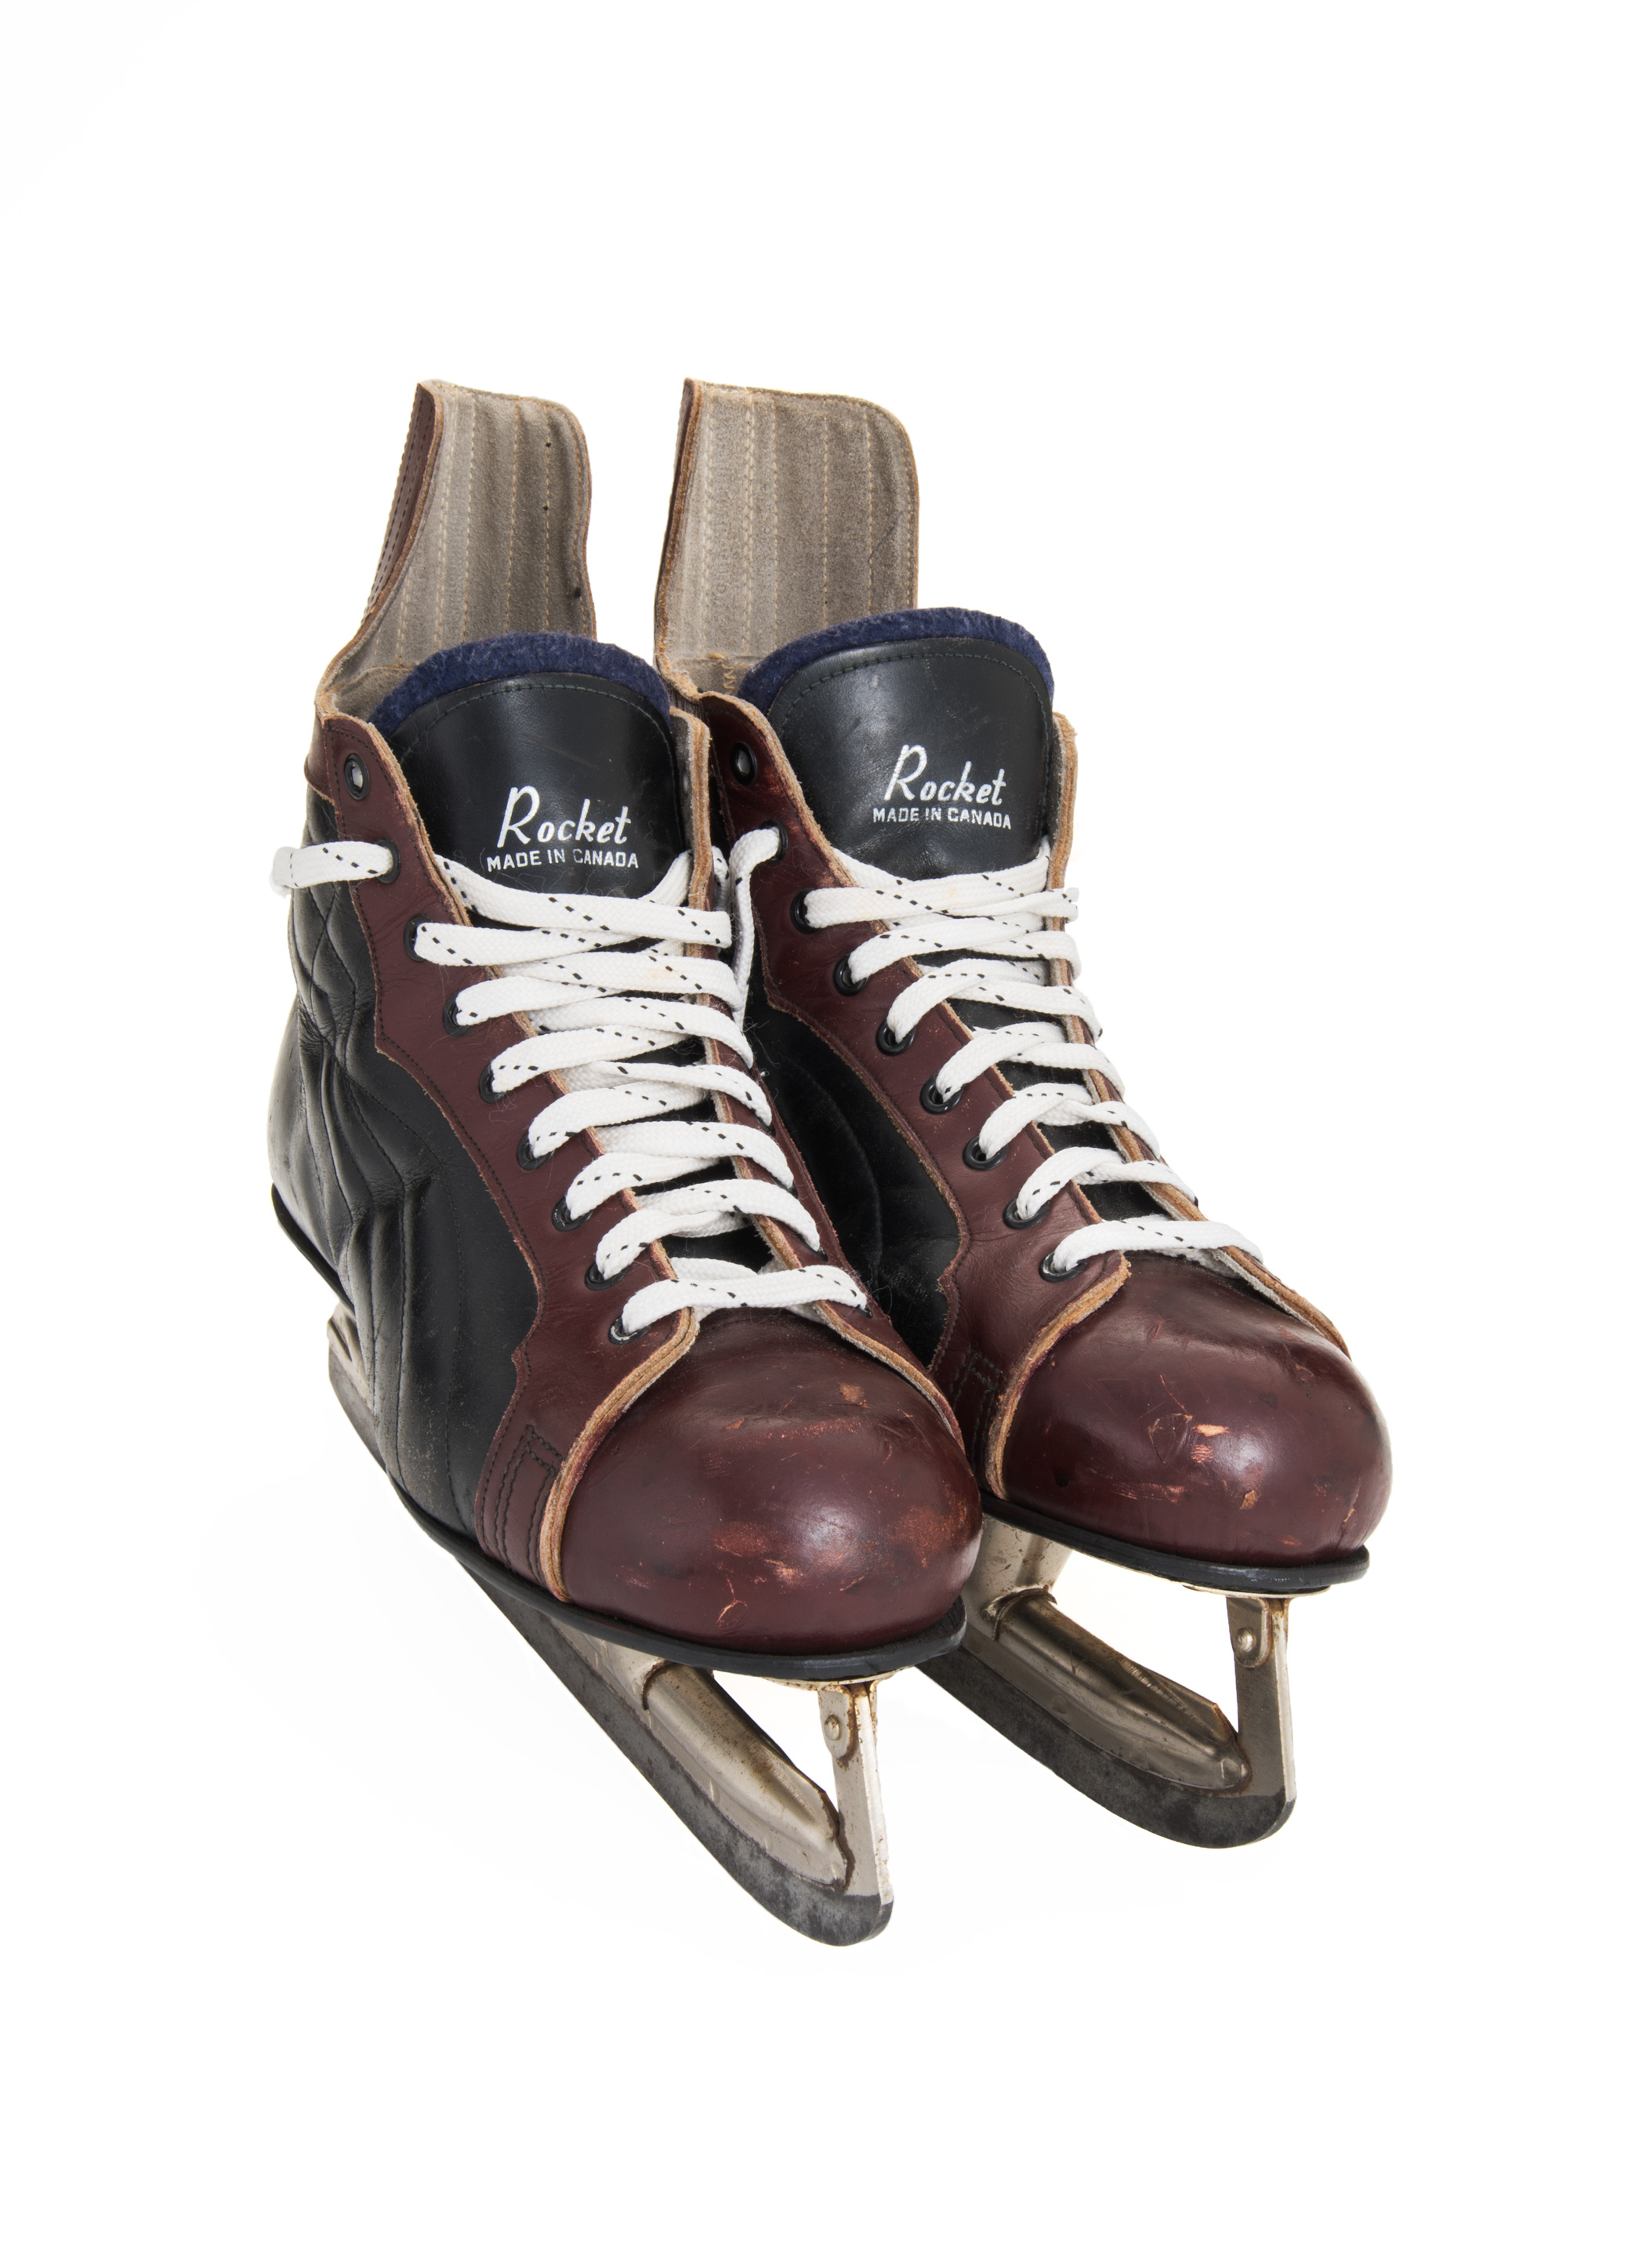 Paire de patins de hockey brun//Pair of brown hockey skates